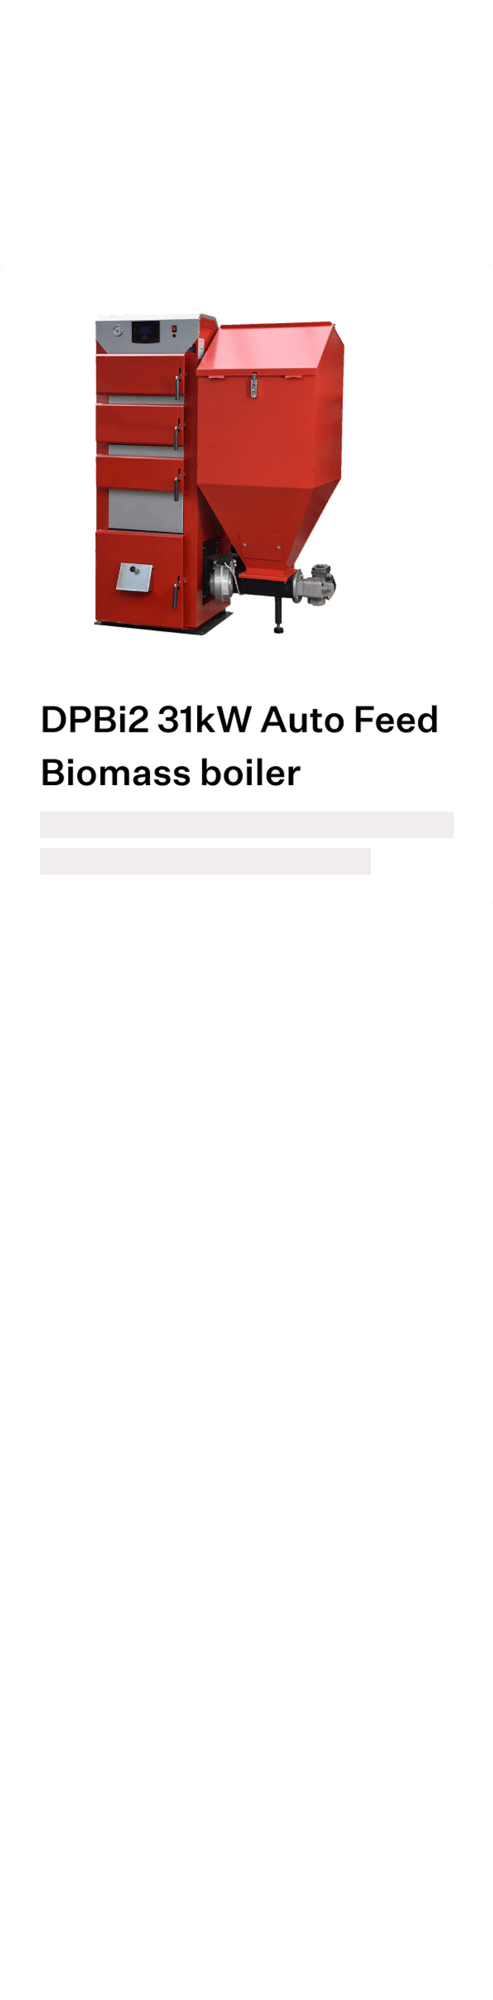 Auto Feed Biomass Boiler